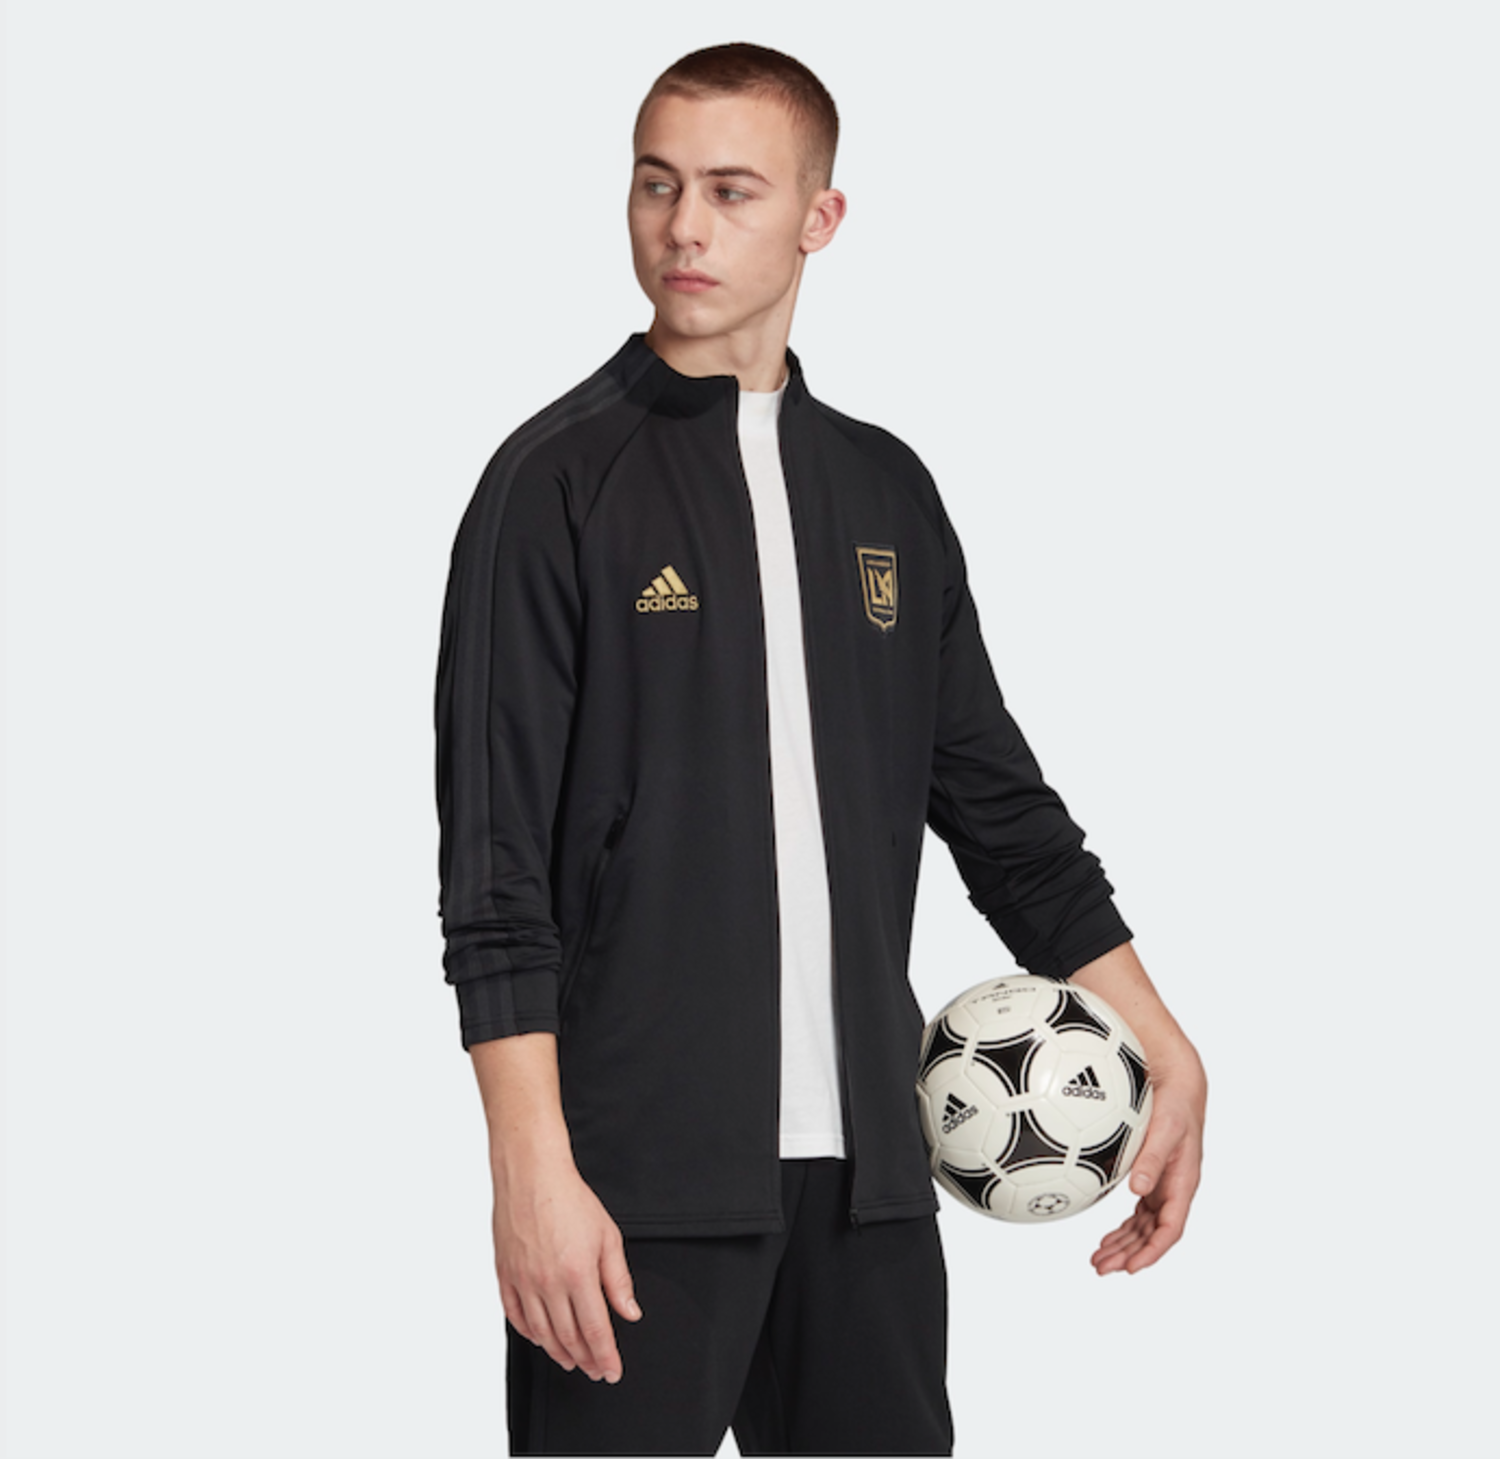 LAFC M adidas 20 Anthem Jacket - The Locker Room of Downey